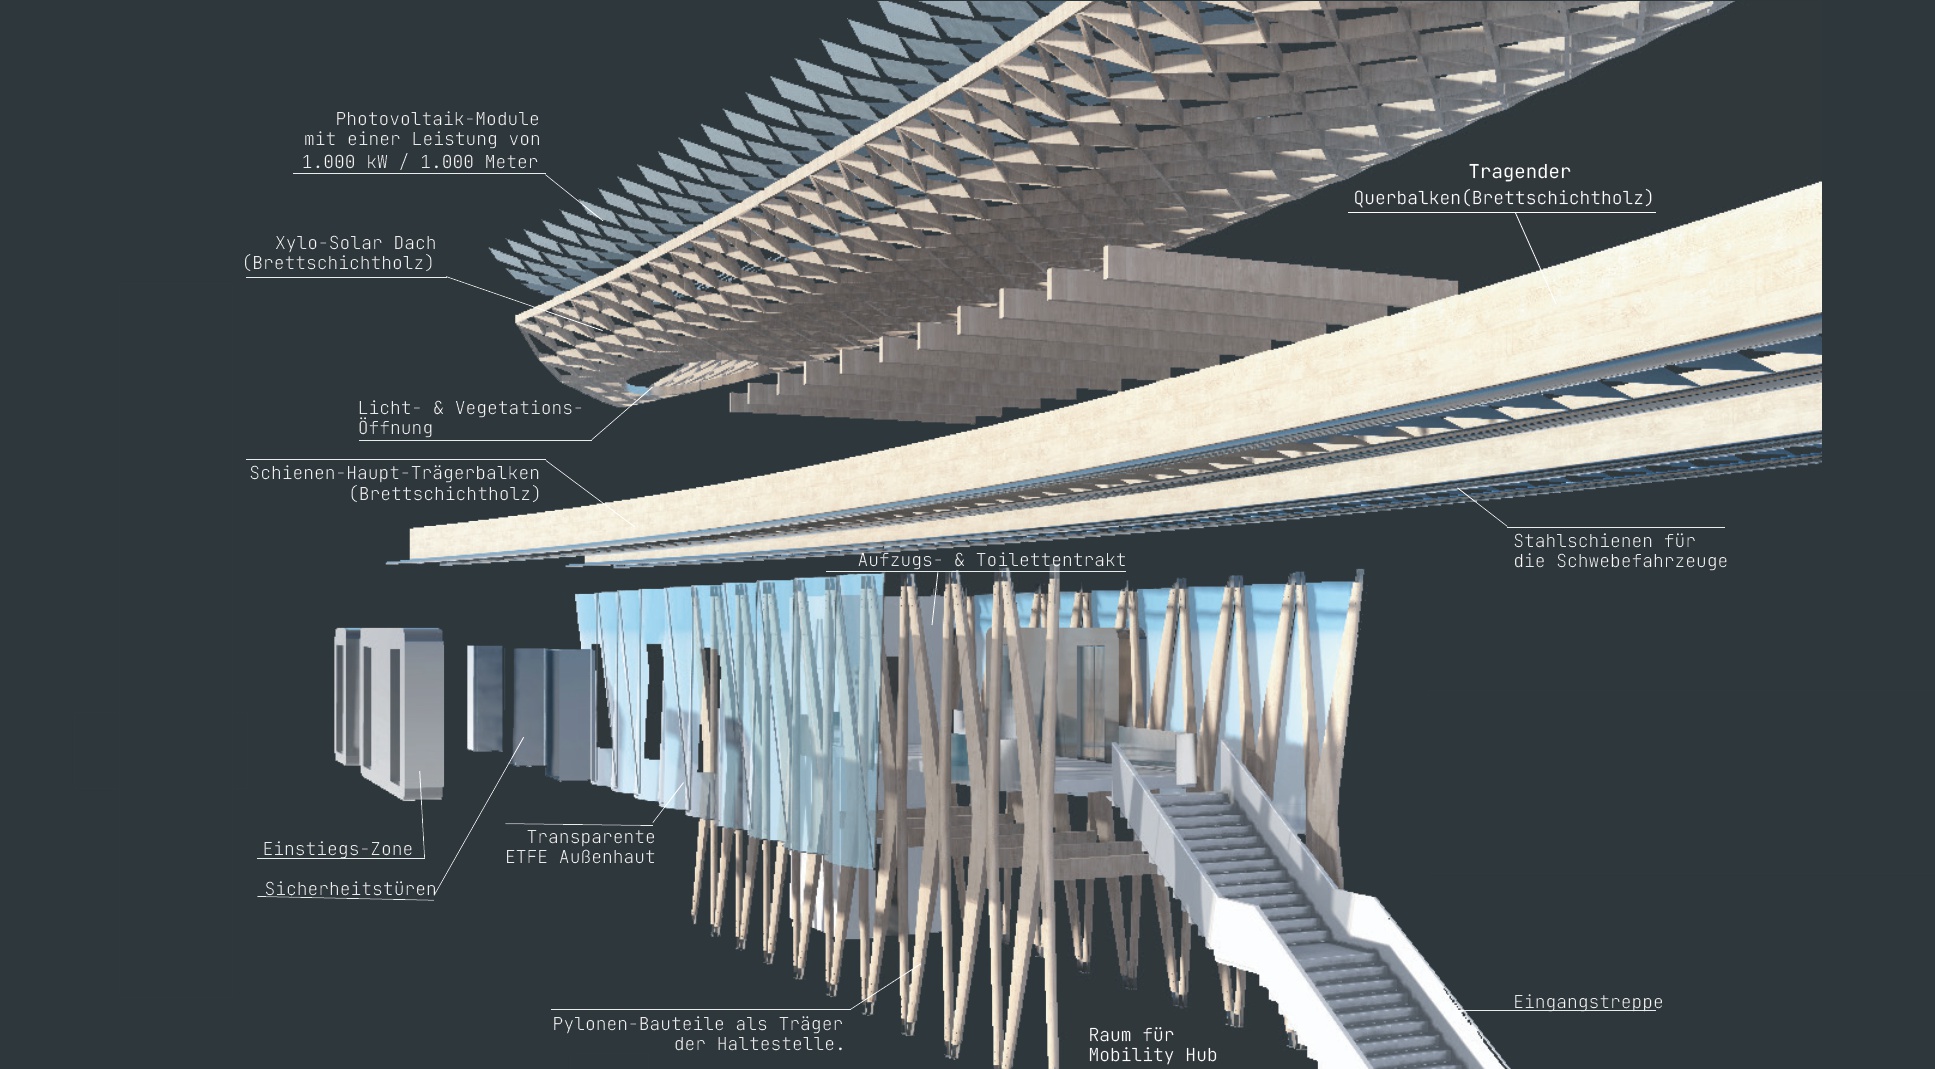 London Design Awards Winner - SUNGLIDER Smart Uberground Metros